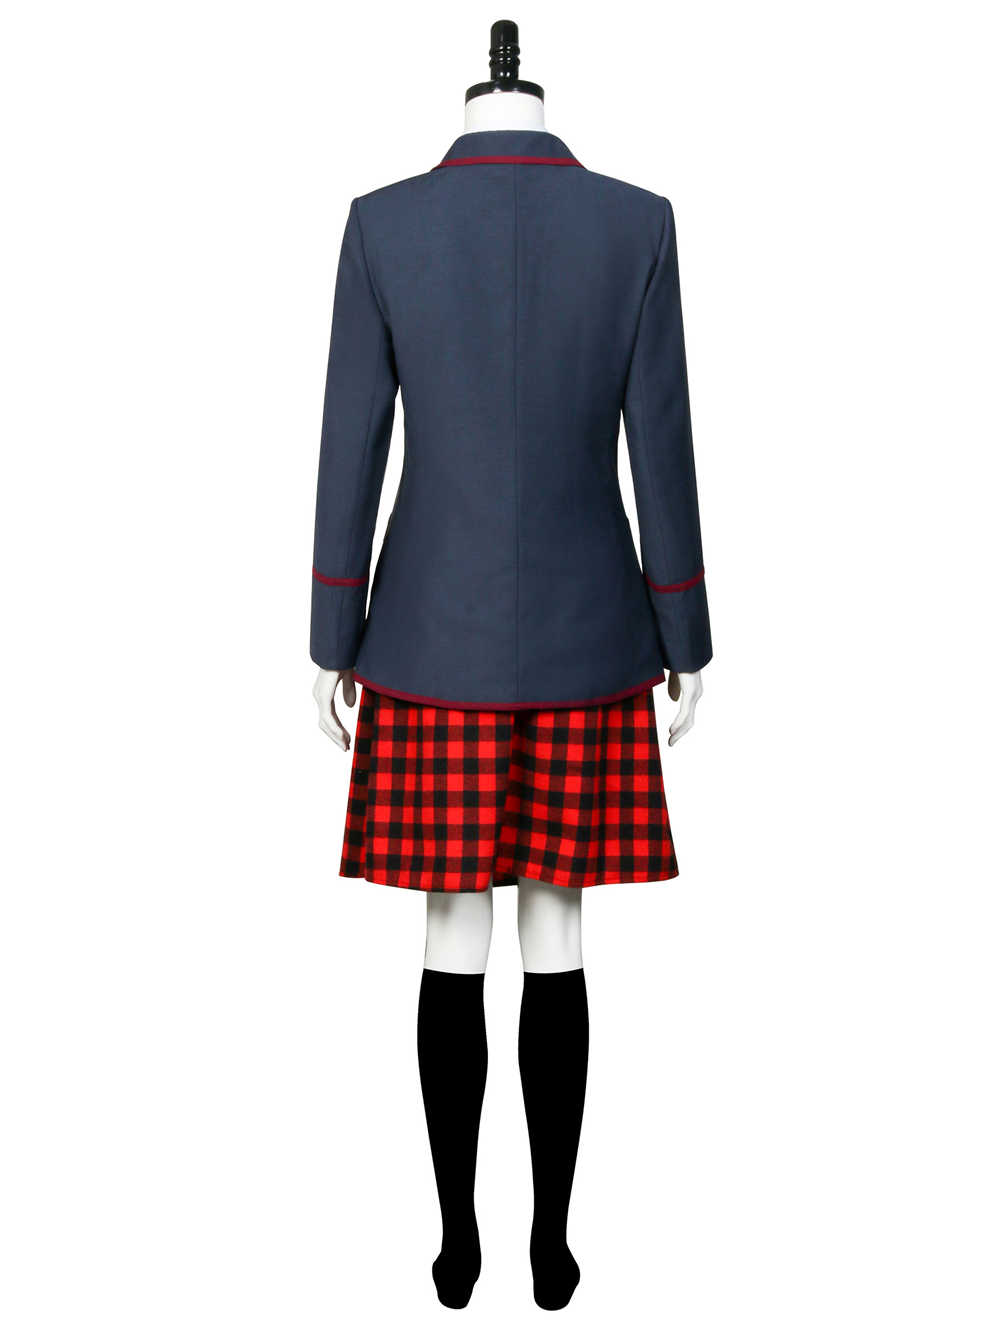 The Umberlla Academy School Uniform Vanya Hargreeves Allison Hargreeves Women Cosplay Costume